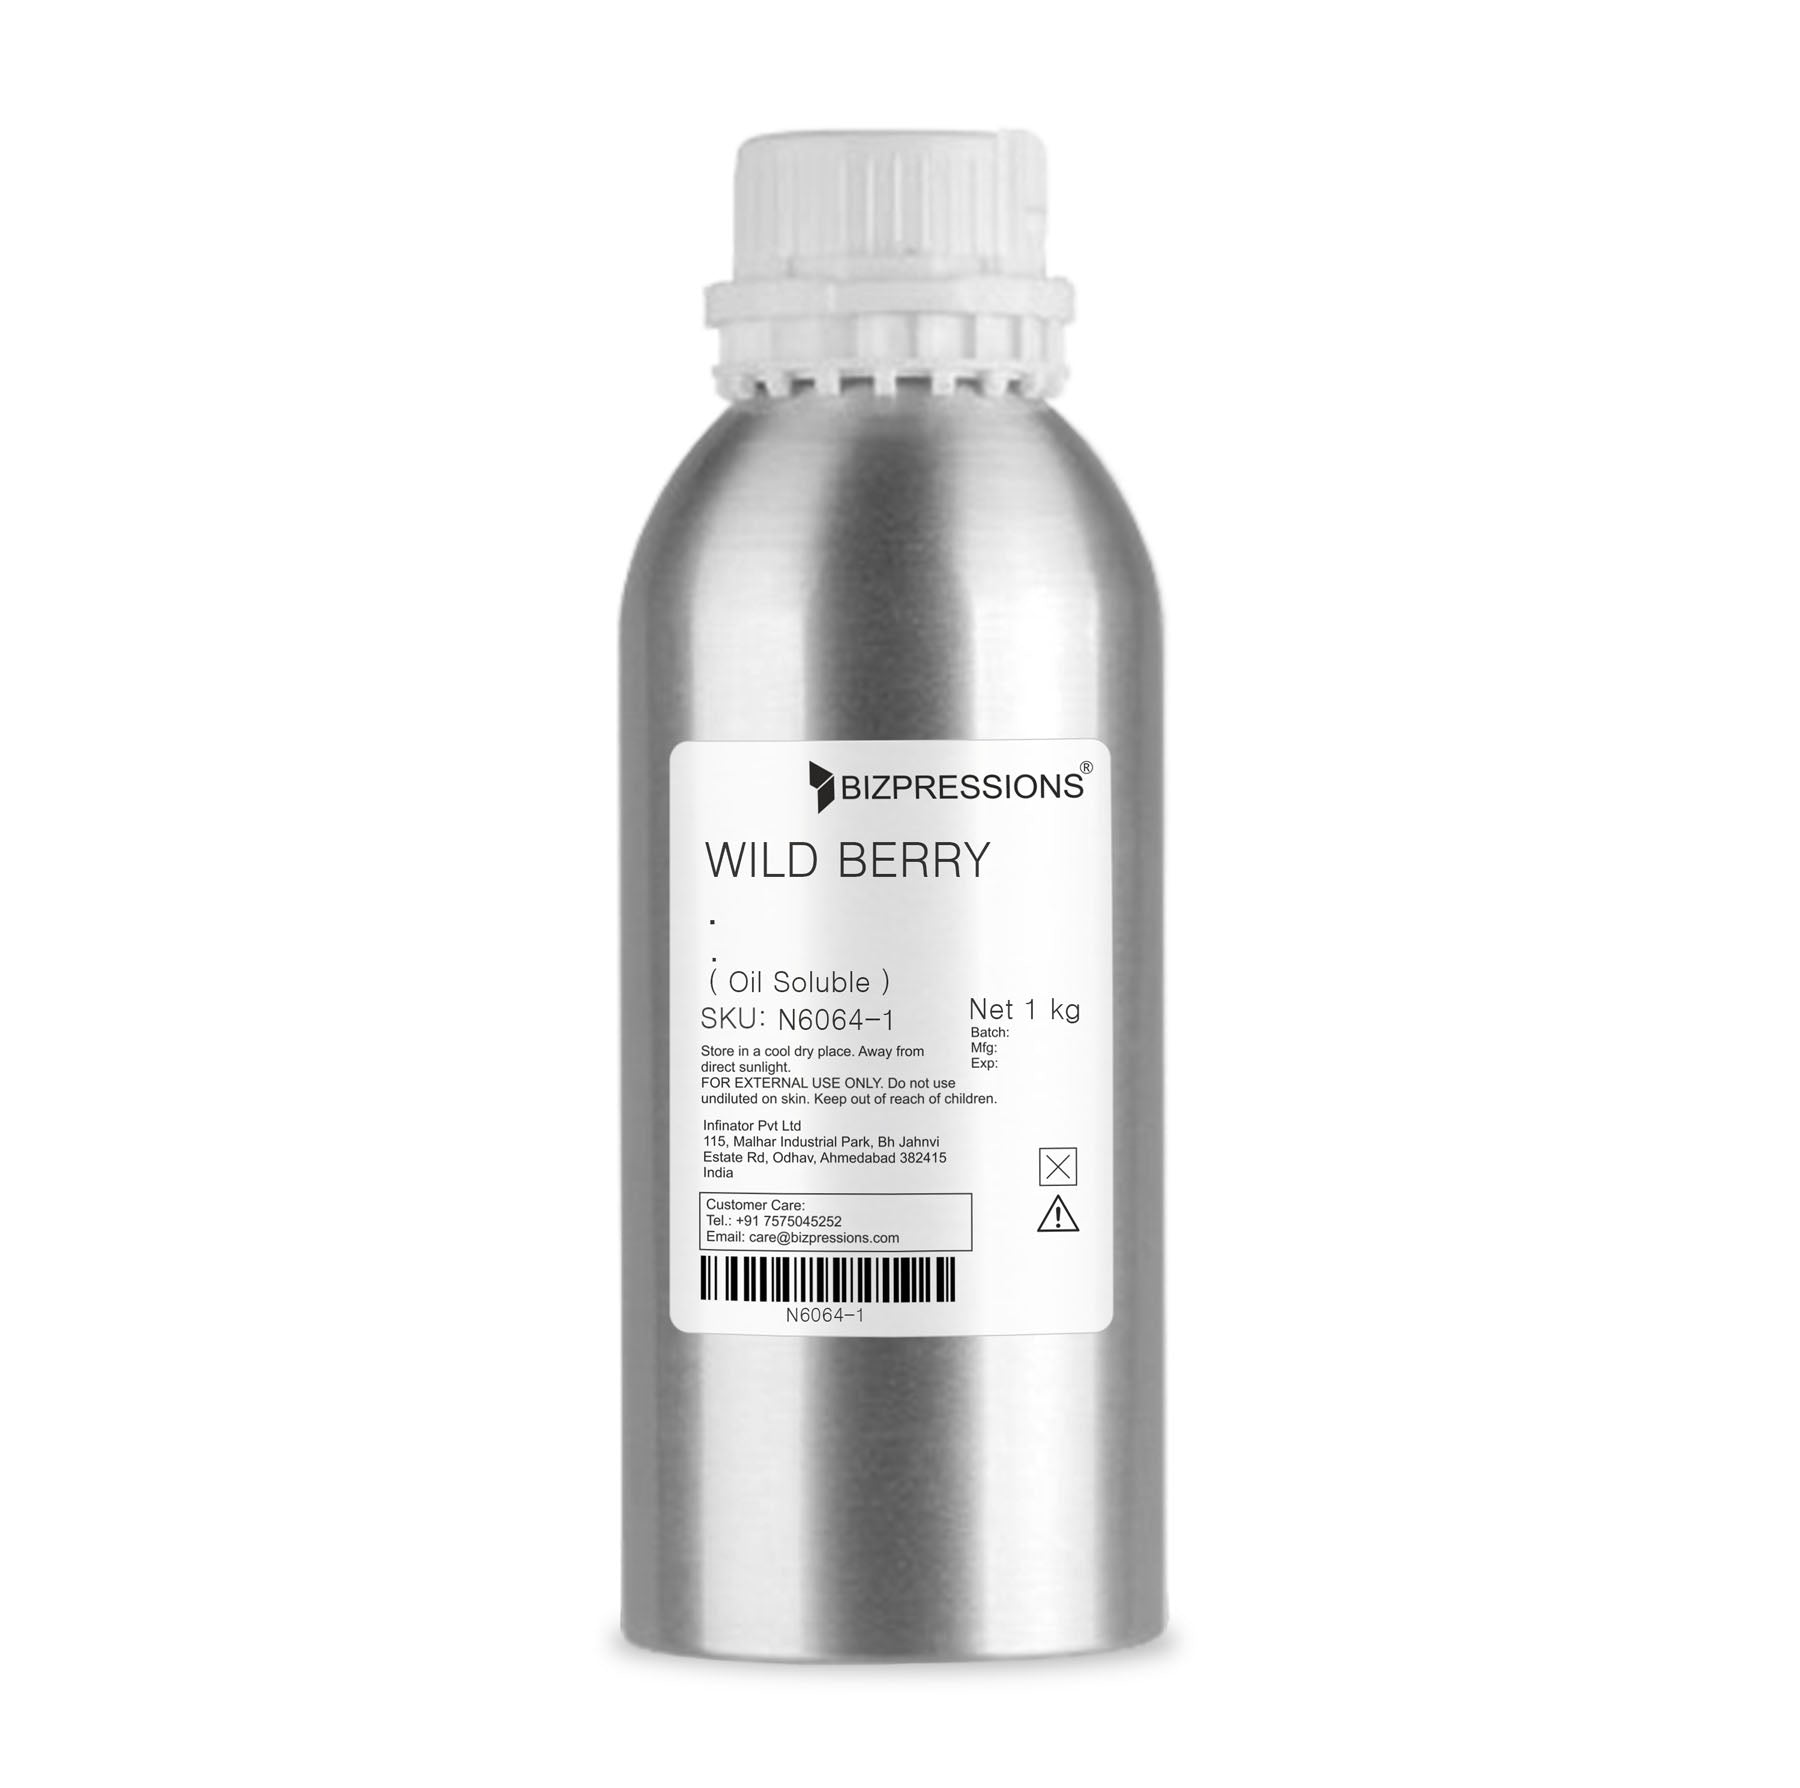 WILD BERRY - Fragrance ( Oil Soluble ) - 1 kg